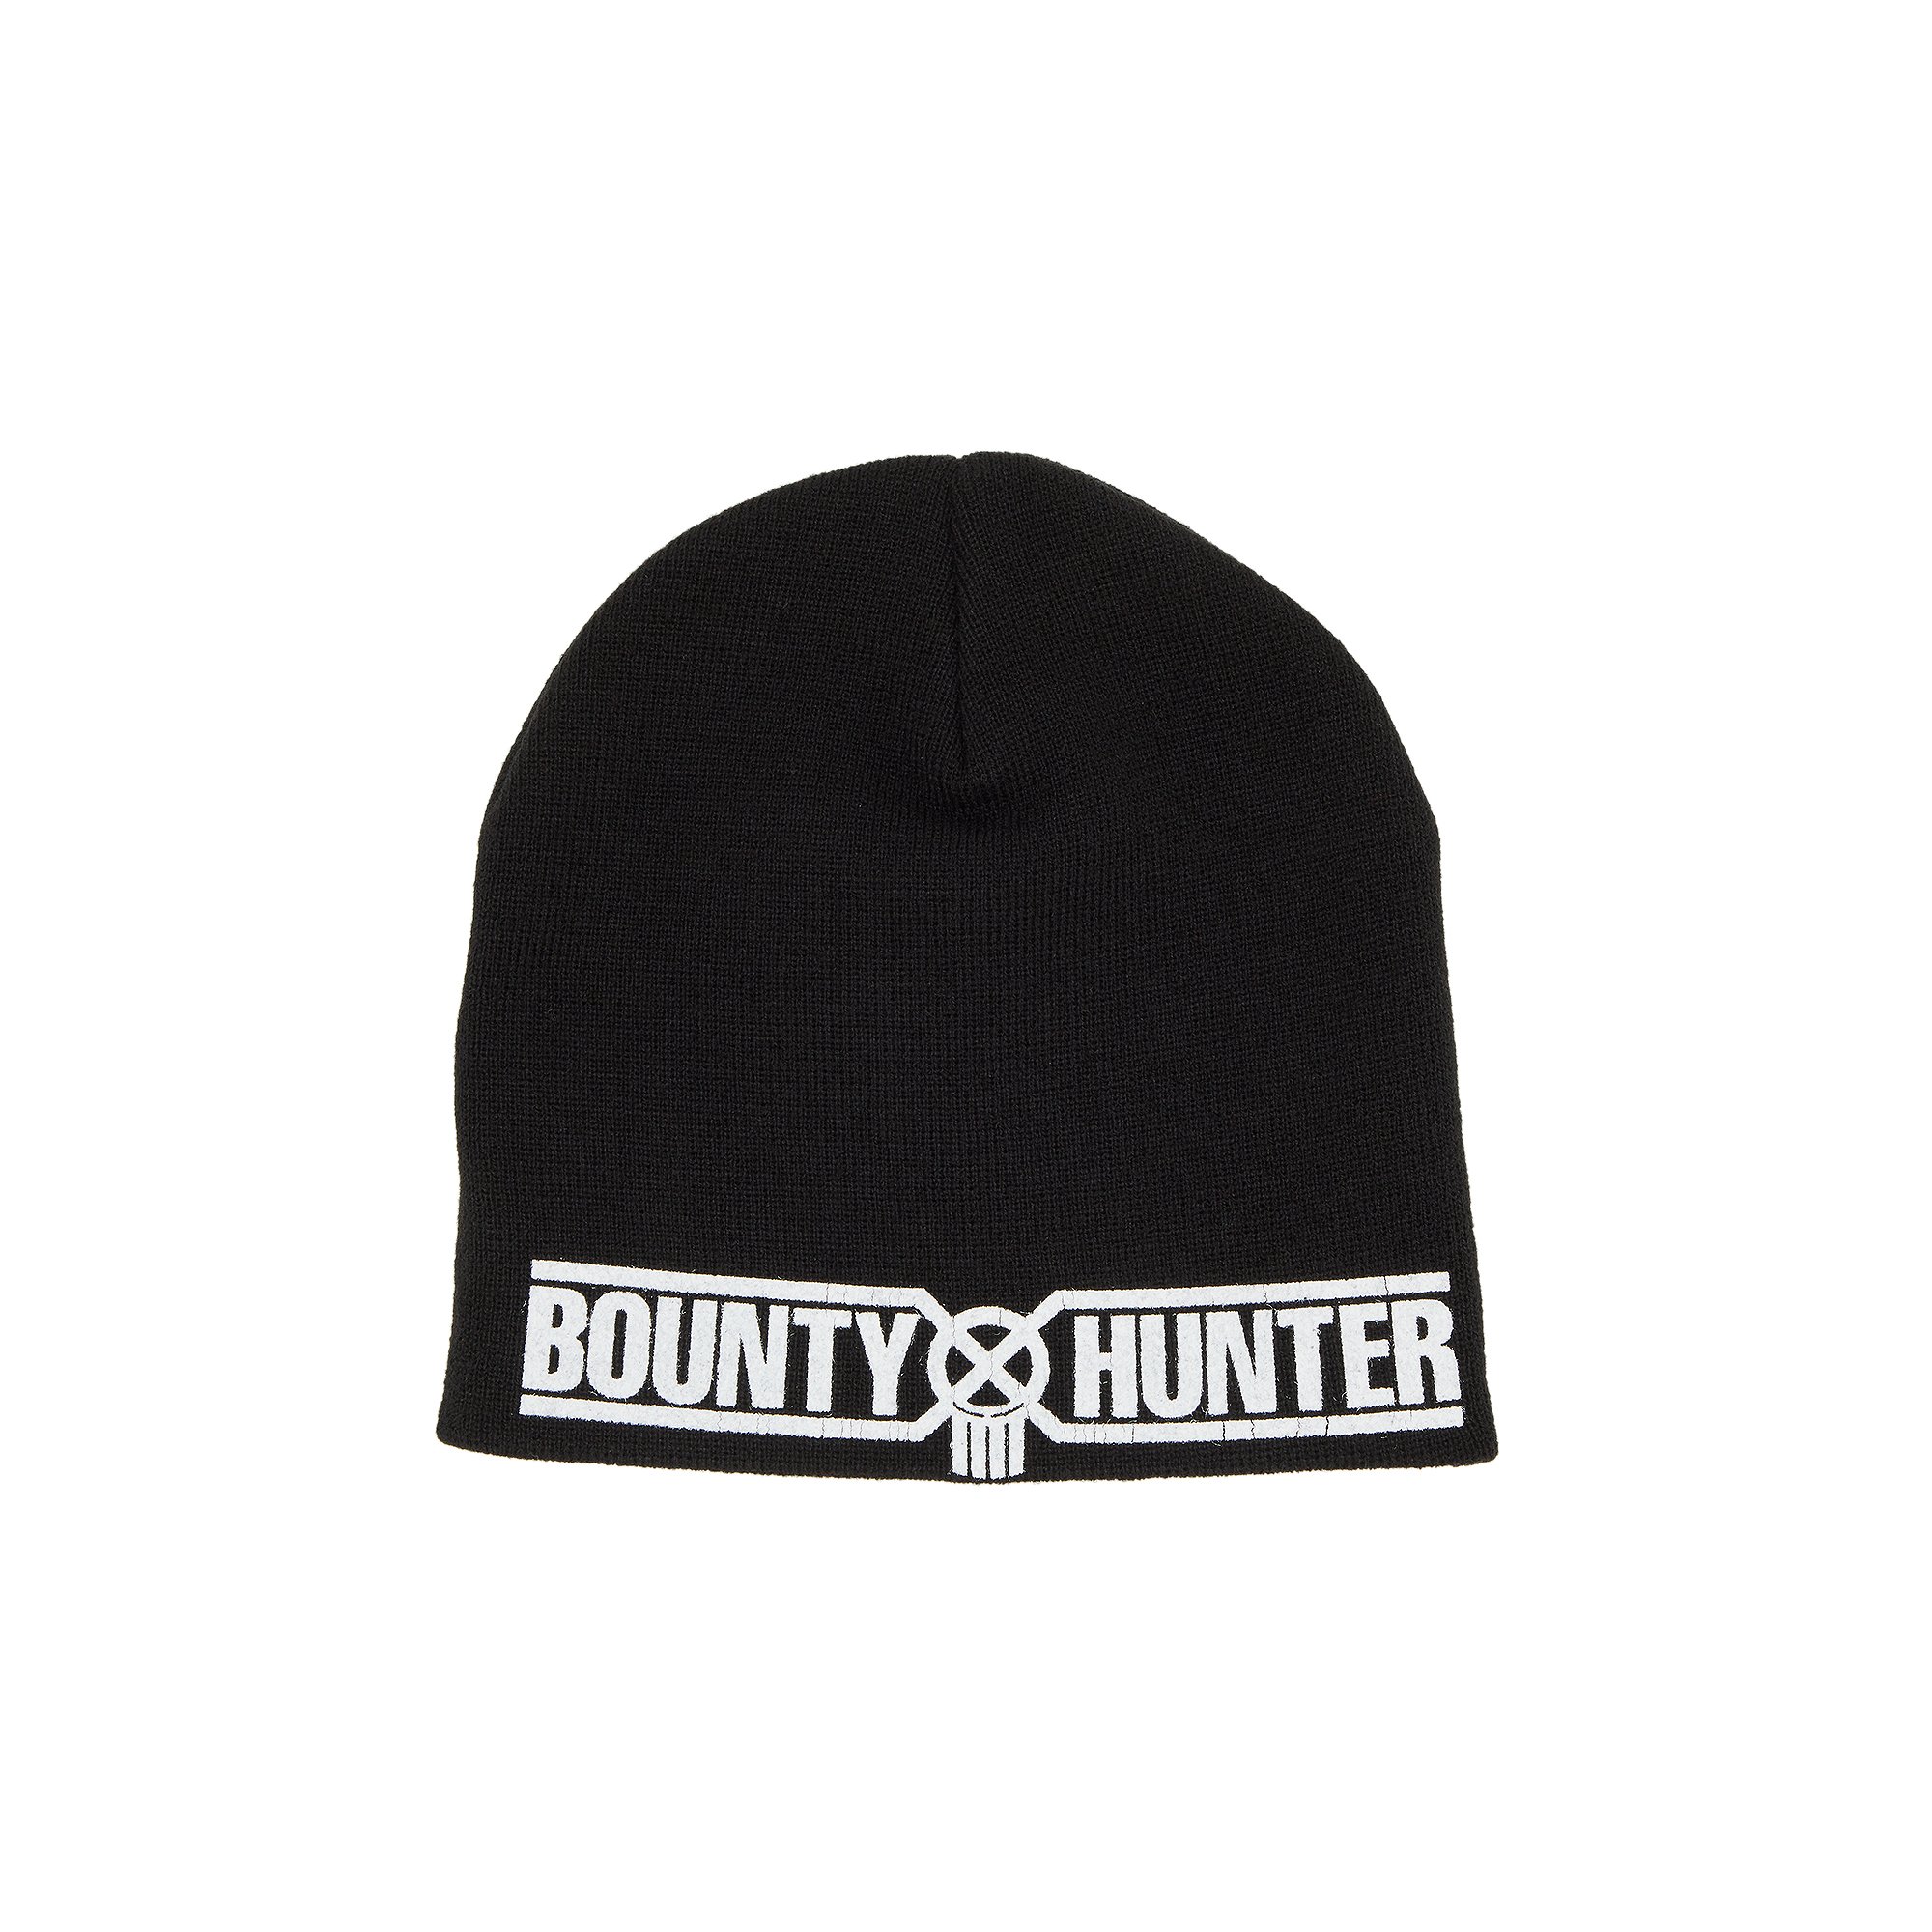 Supreme x Bounty Hunter Beanie 'Black'